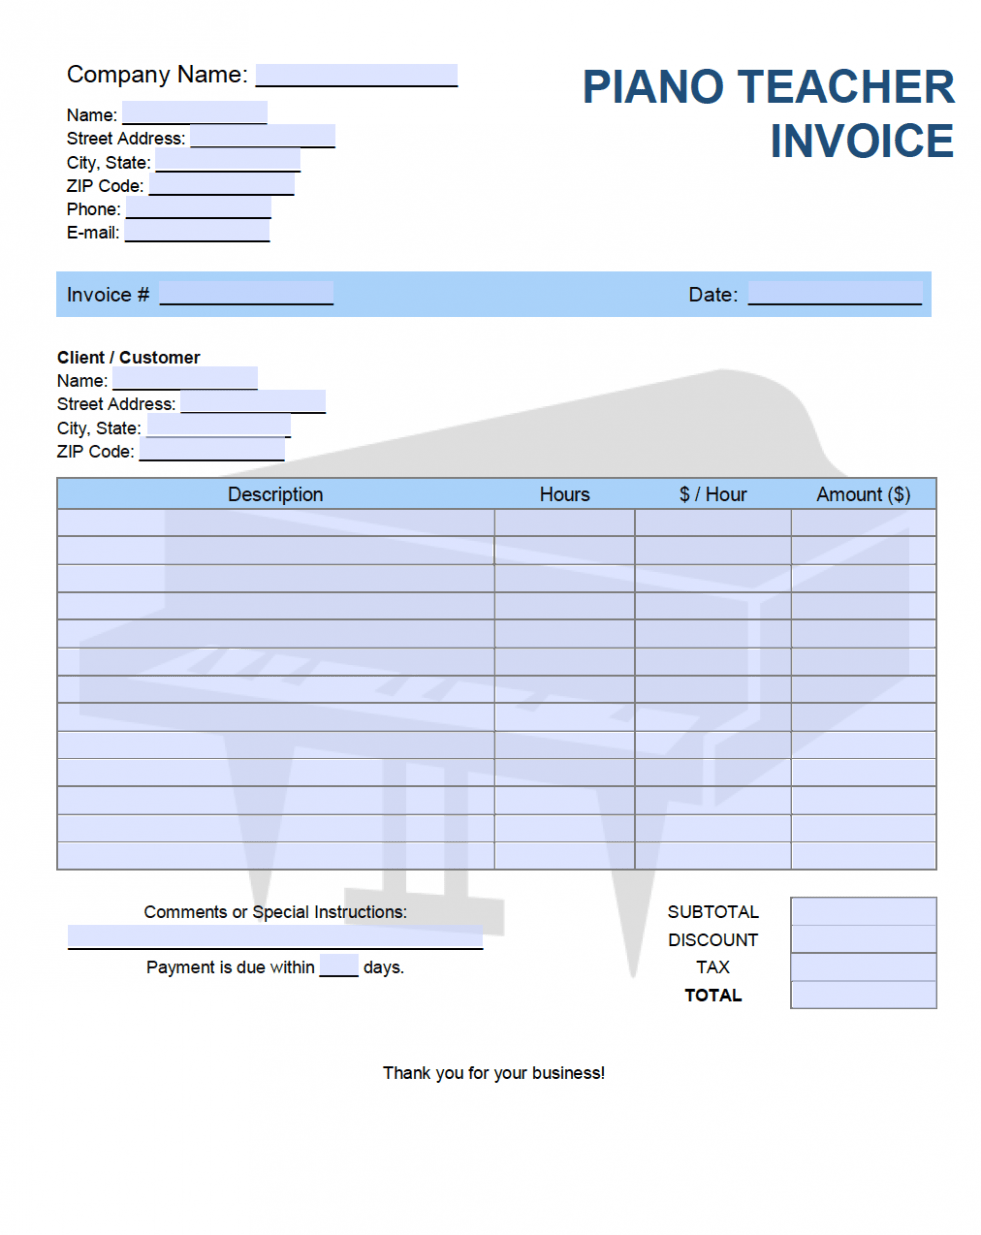 Printable Piano Lesson Invoice Template Excel